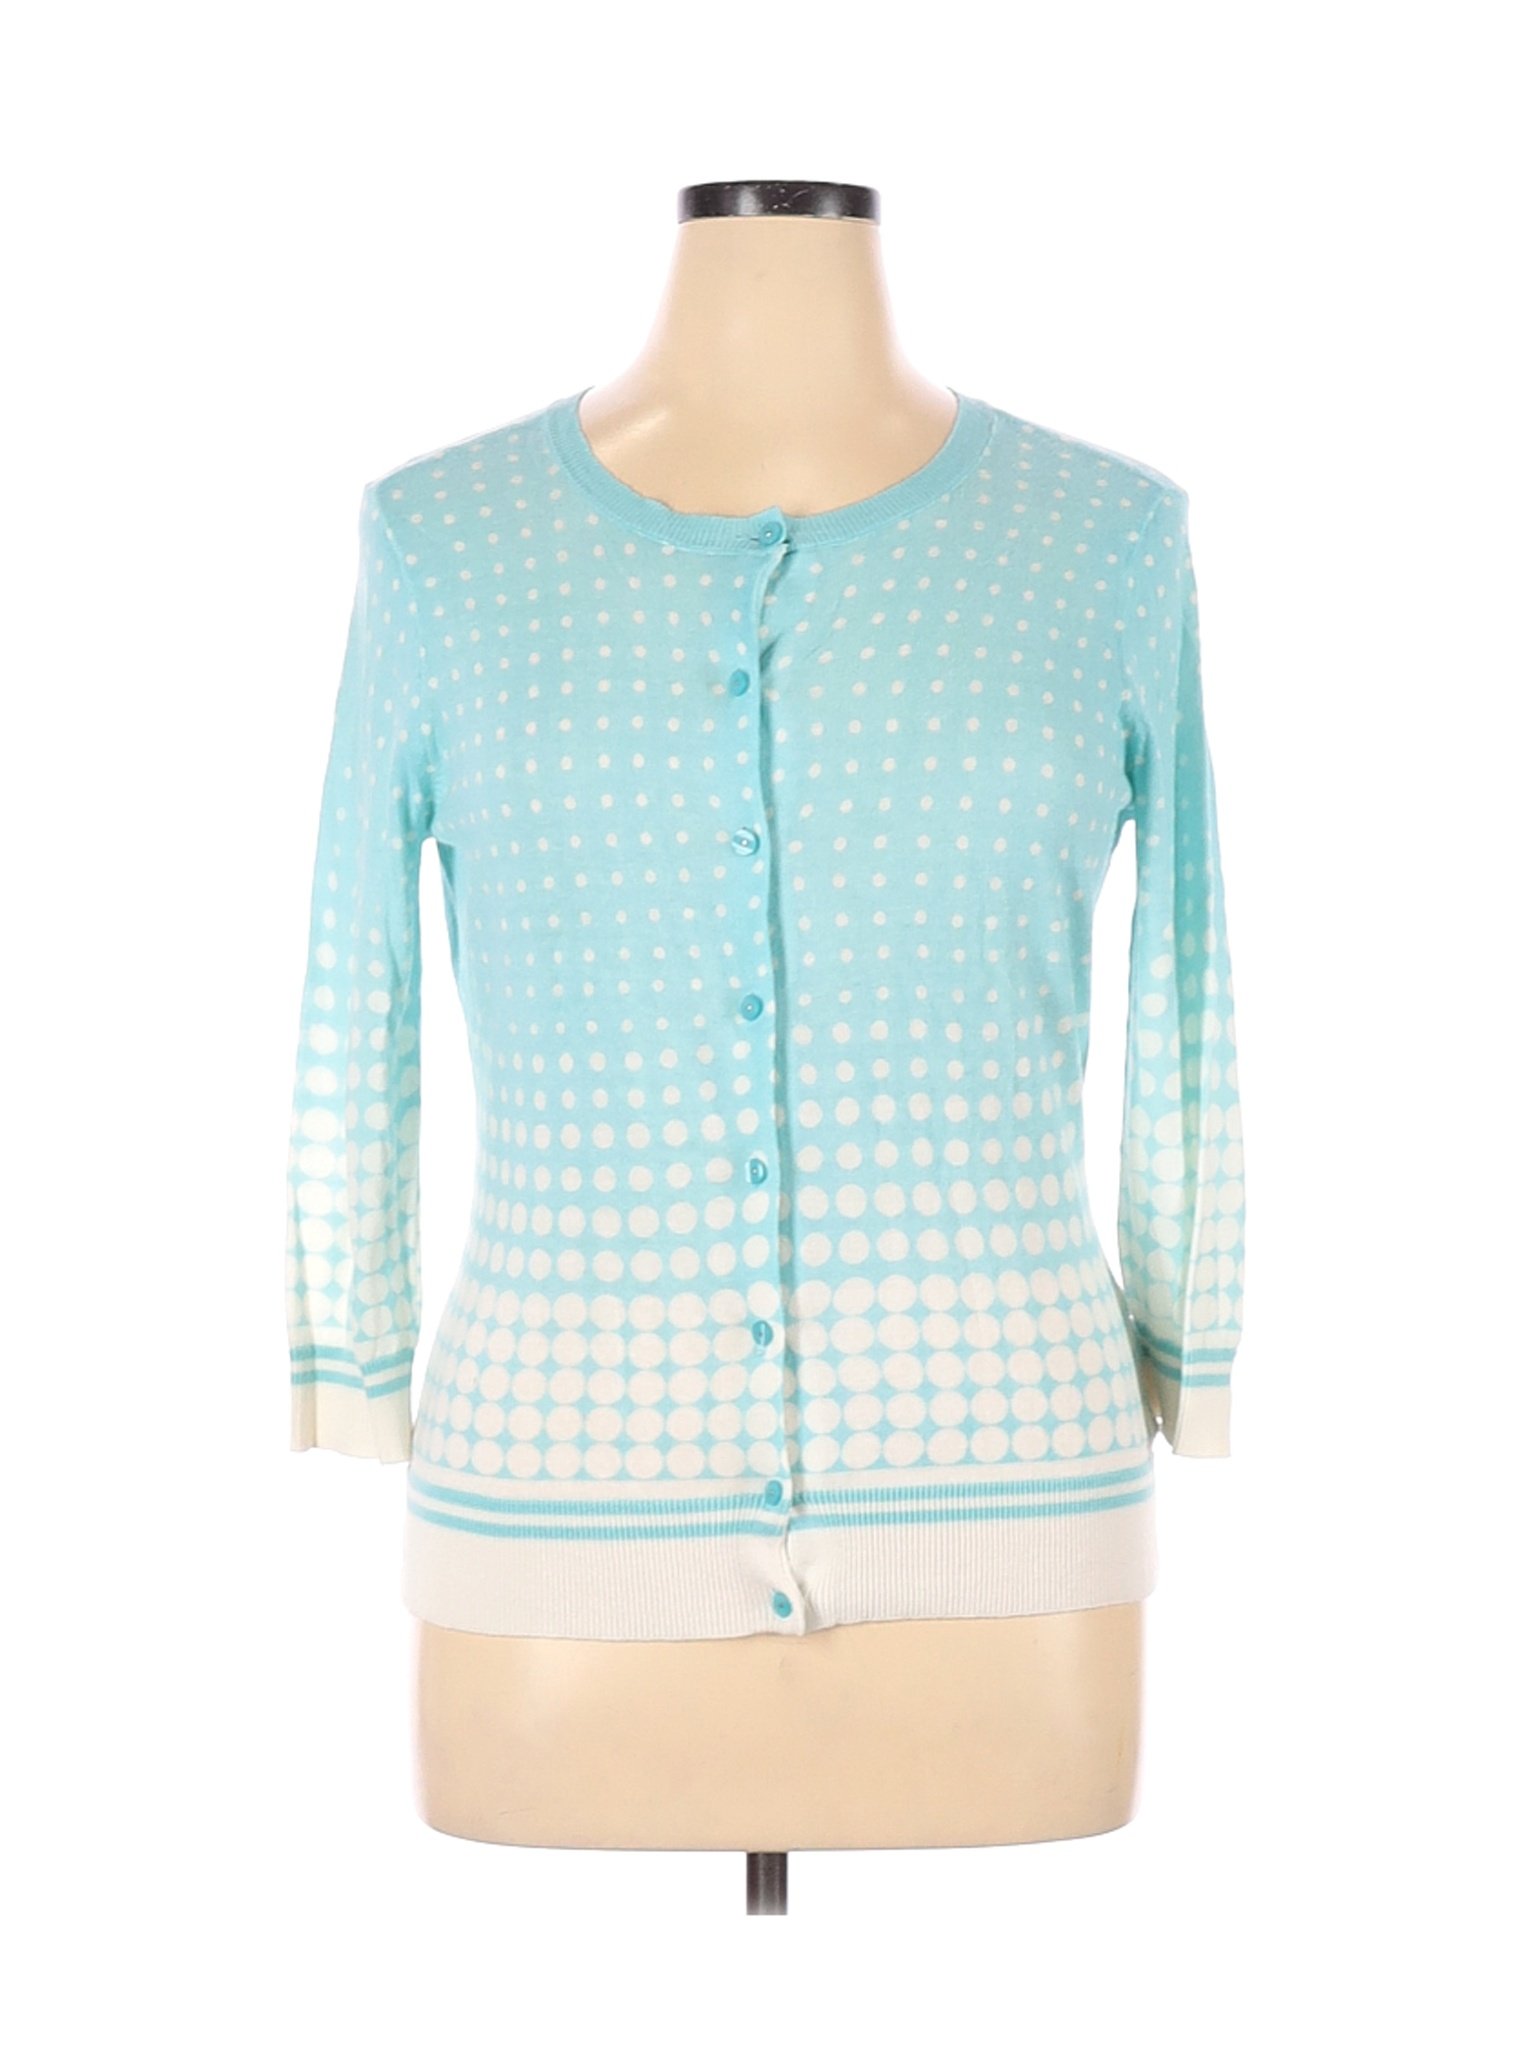 New York & Company Women Blue Cardigan XL | eBay